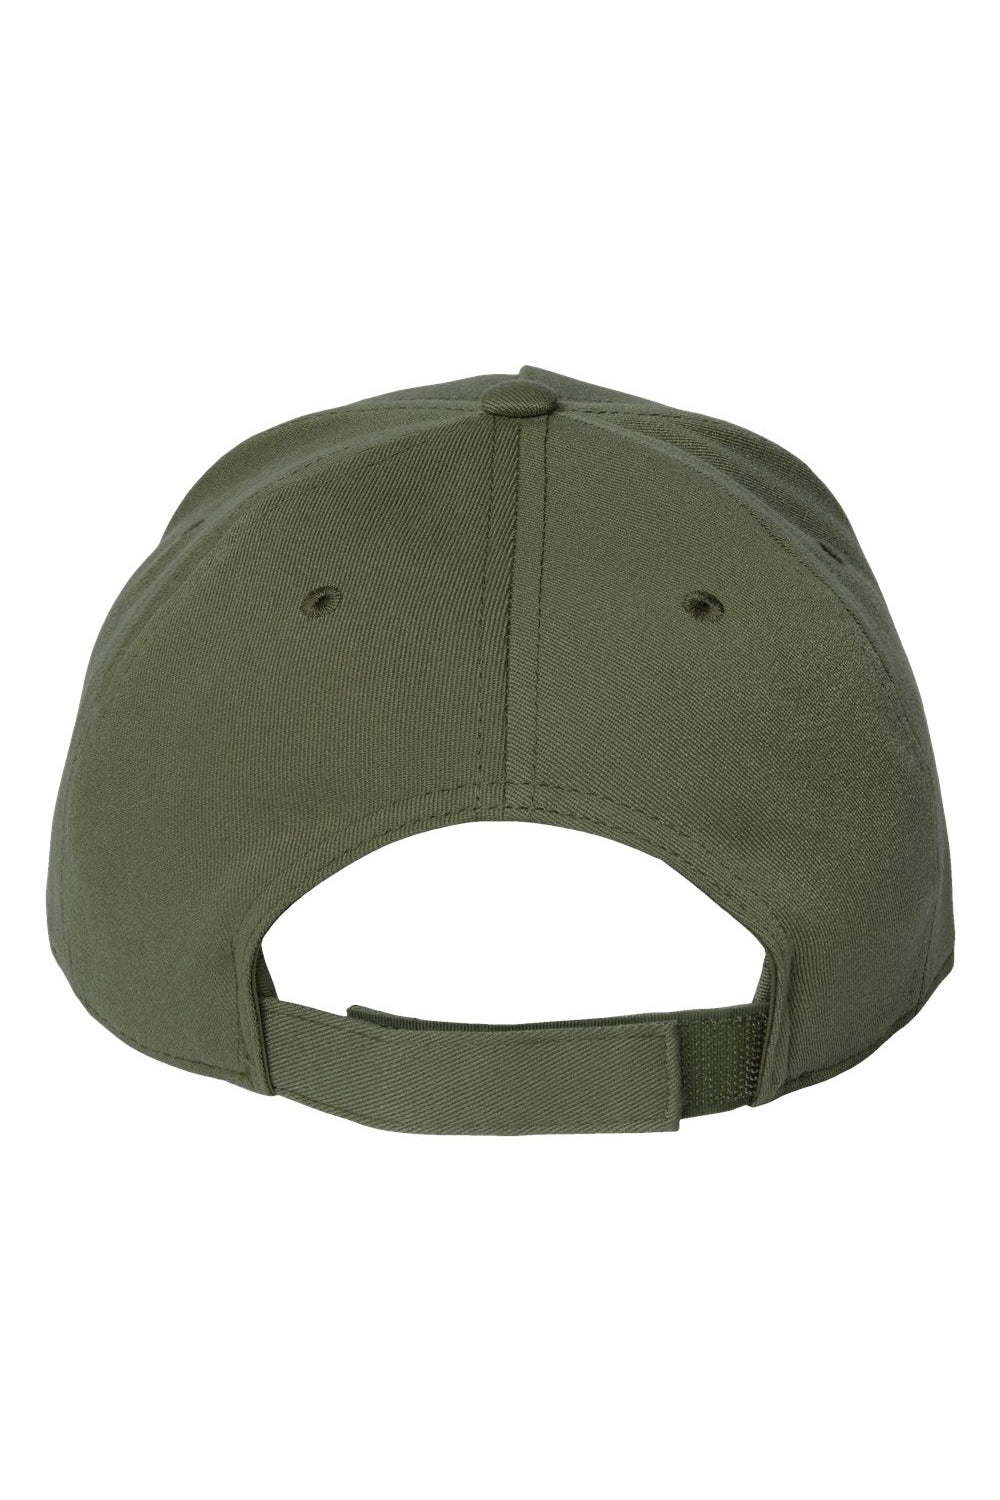 Atlantis Headwear FIJI Mens Sustainable Adjustable Hat Olive Green Flat Back